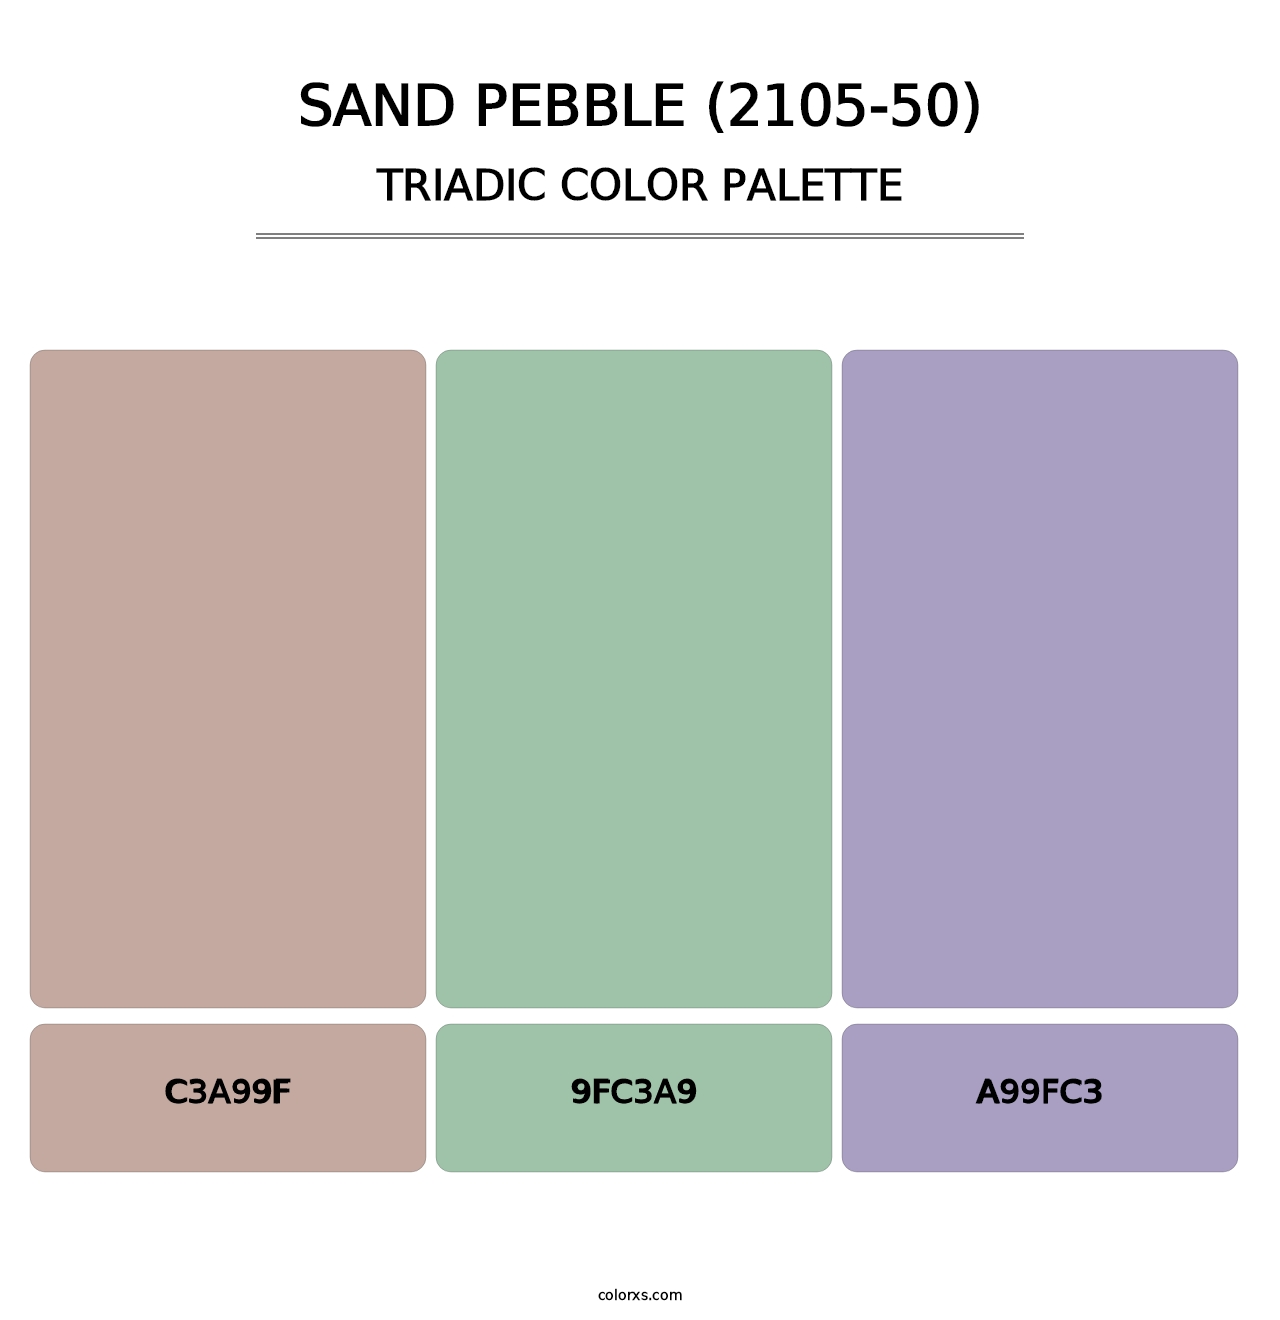 Sand Pebble (2105-50) - Triadic Color Palette